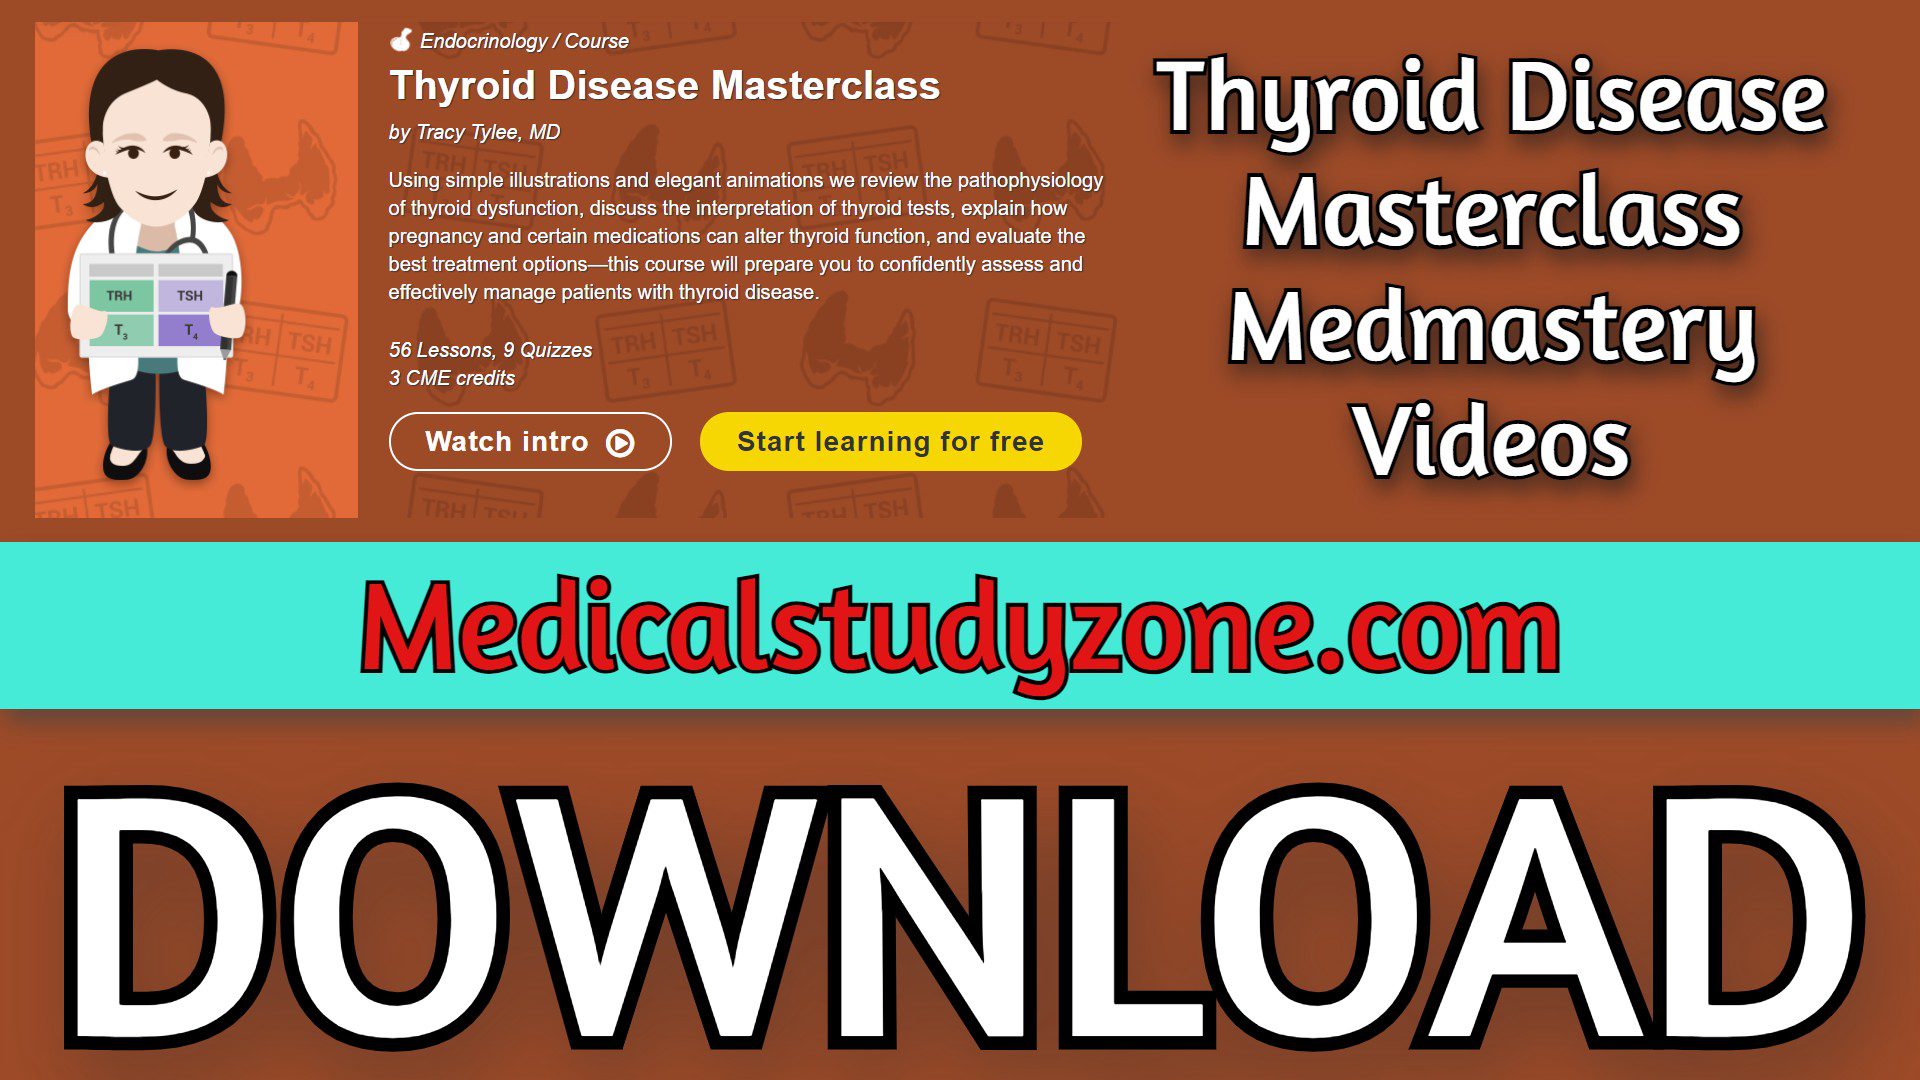 Thyroid Disease Masterclass | Medmastery 2021 Videos Free Download